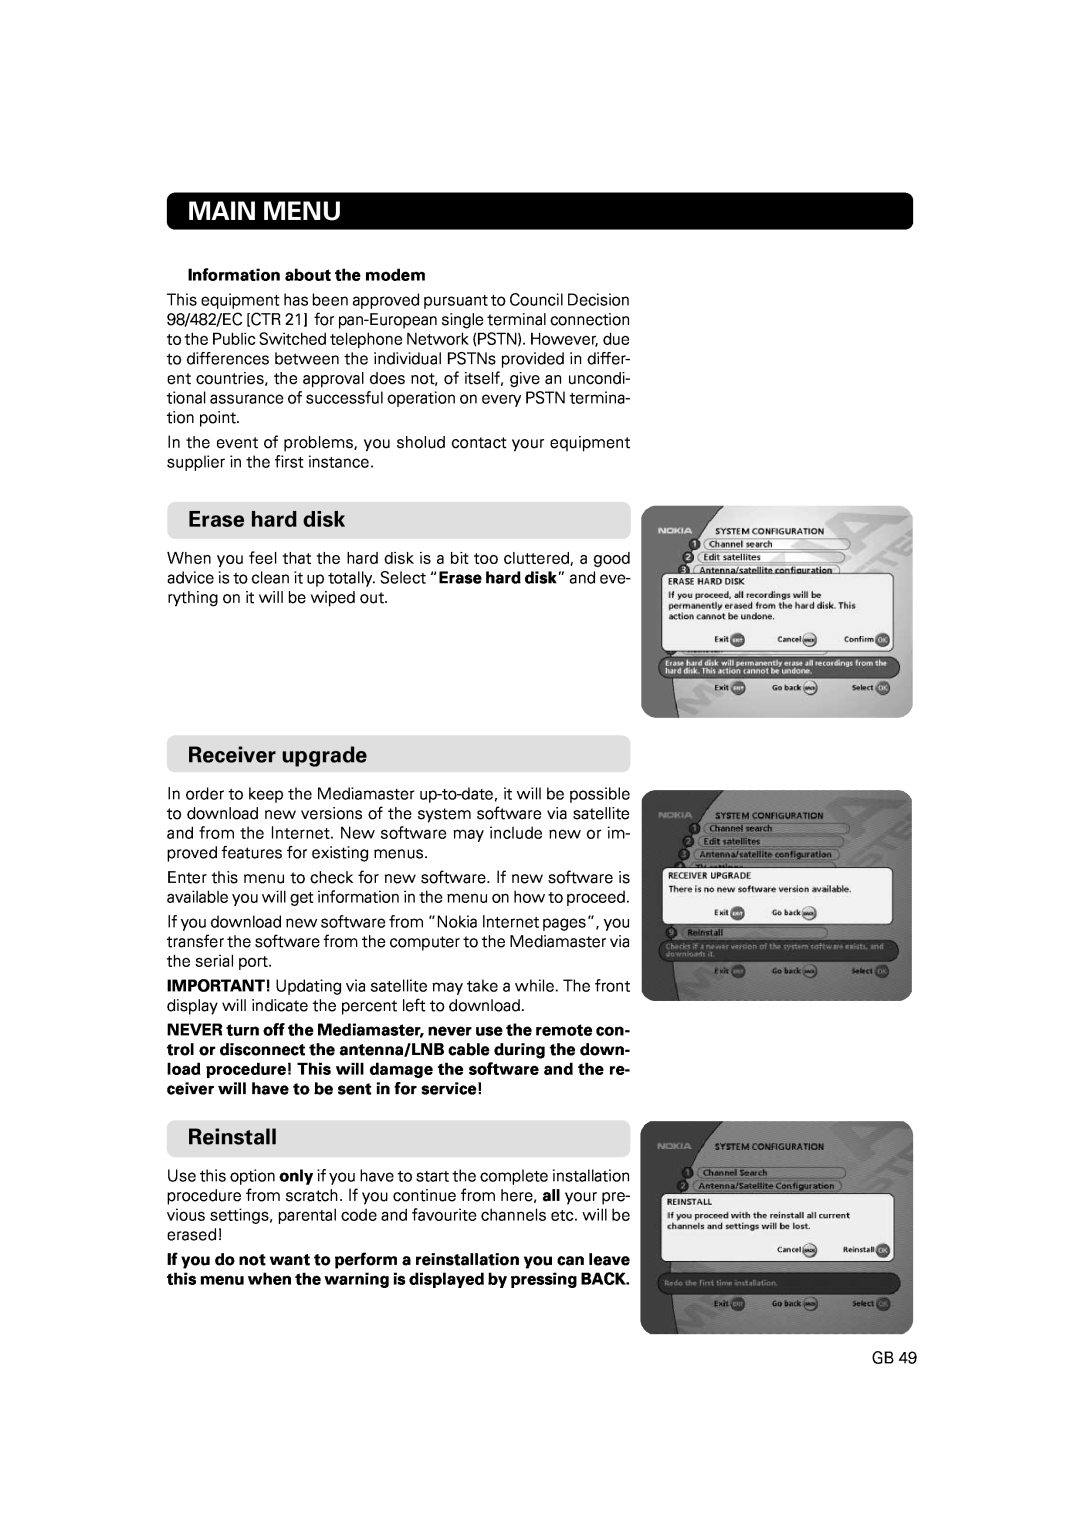 JA Audio 9902S manual Erase hard disk, Receiver upgrade, Reinstall, Main Menu, Information about the modem 